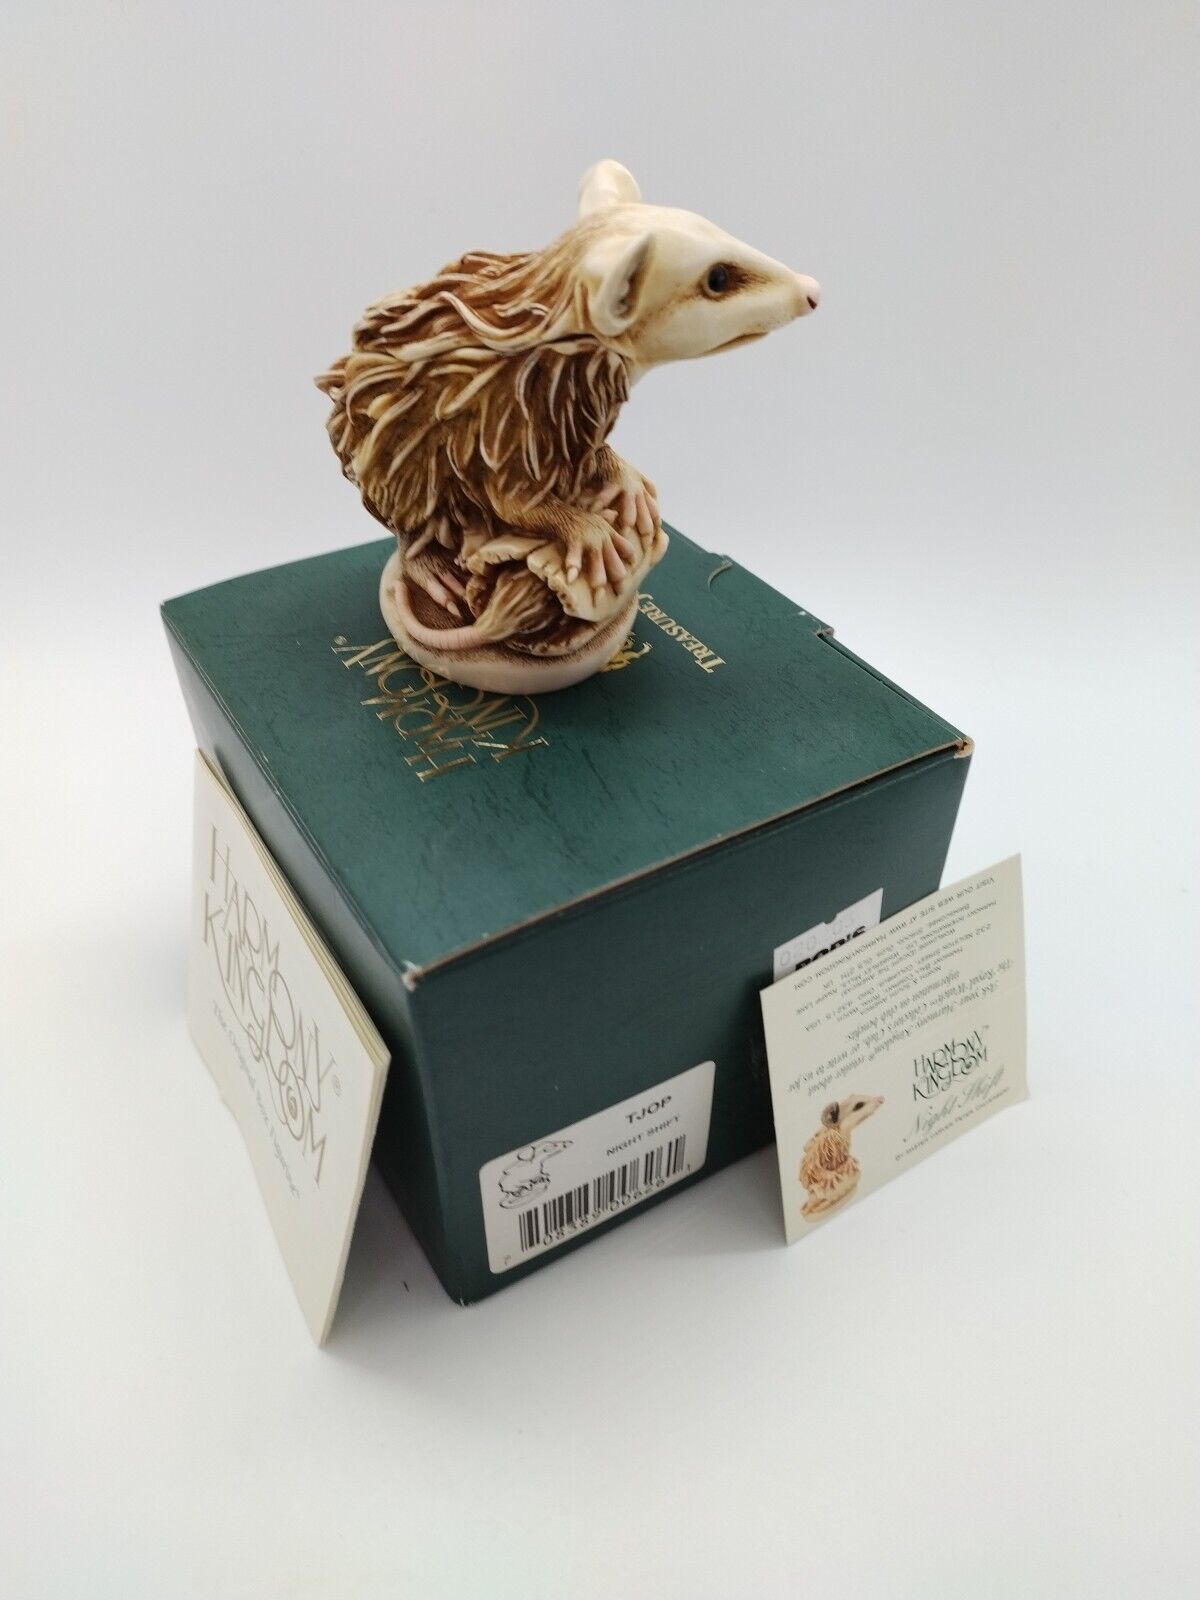 Harmony Kingdom Night Shift Possum Treasure Jest Figurine, Signed Pete Calvsbert